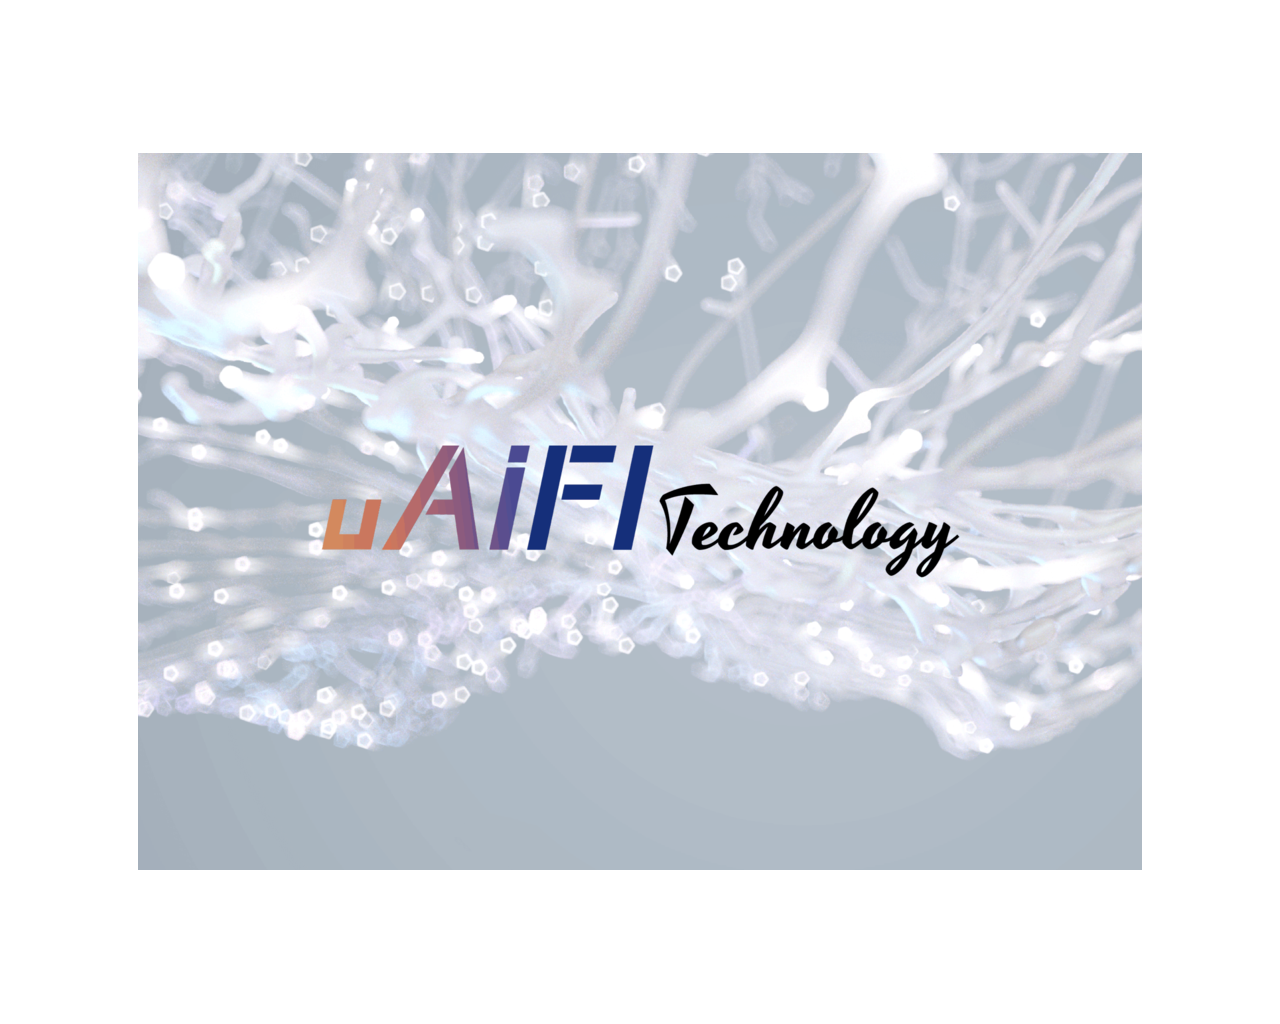 logo of uAIFI technology with splendid background